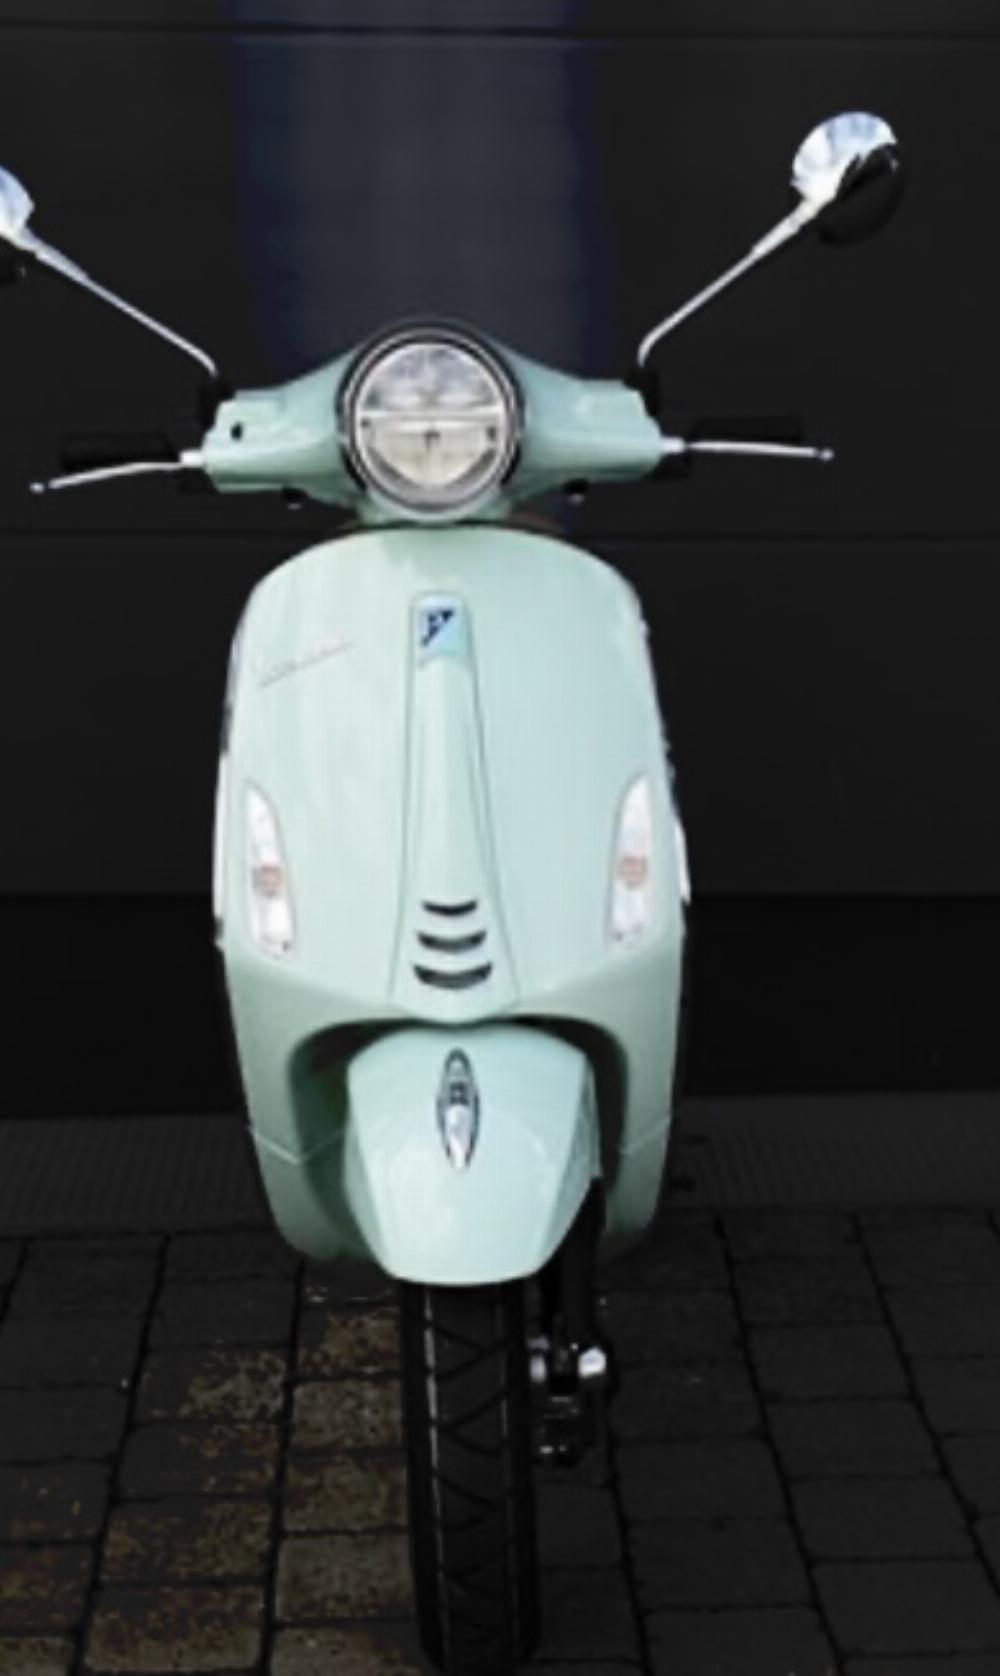 Motorrad verkaufen Vespa Piaggio  Ankauf